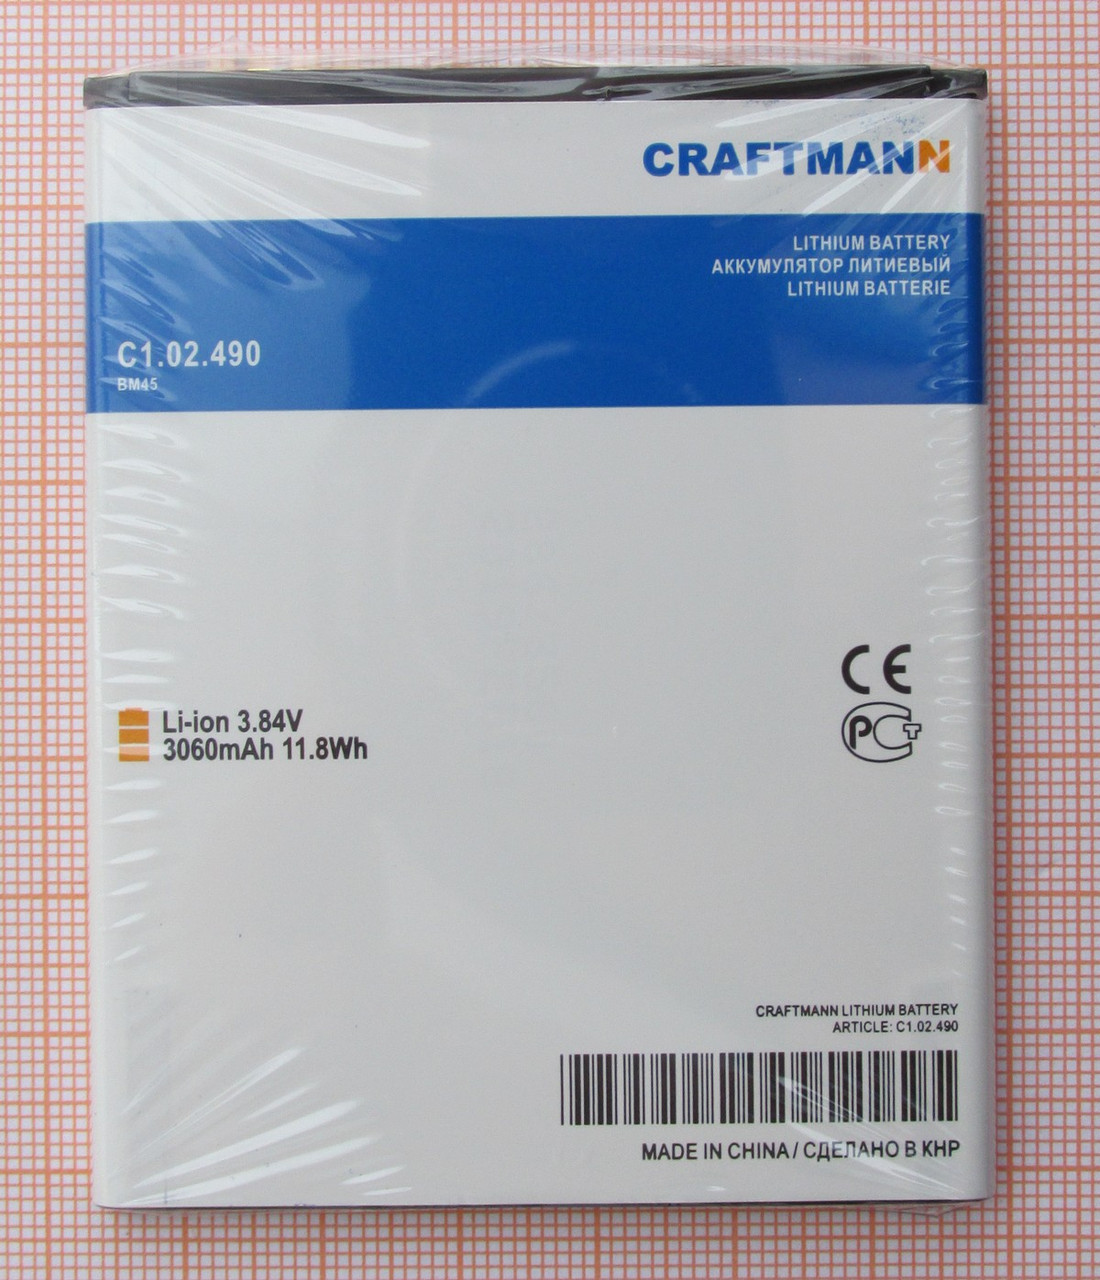 Аккумулятор Craftmann BM45 для Xiaomi, фото 1